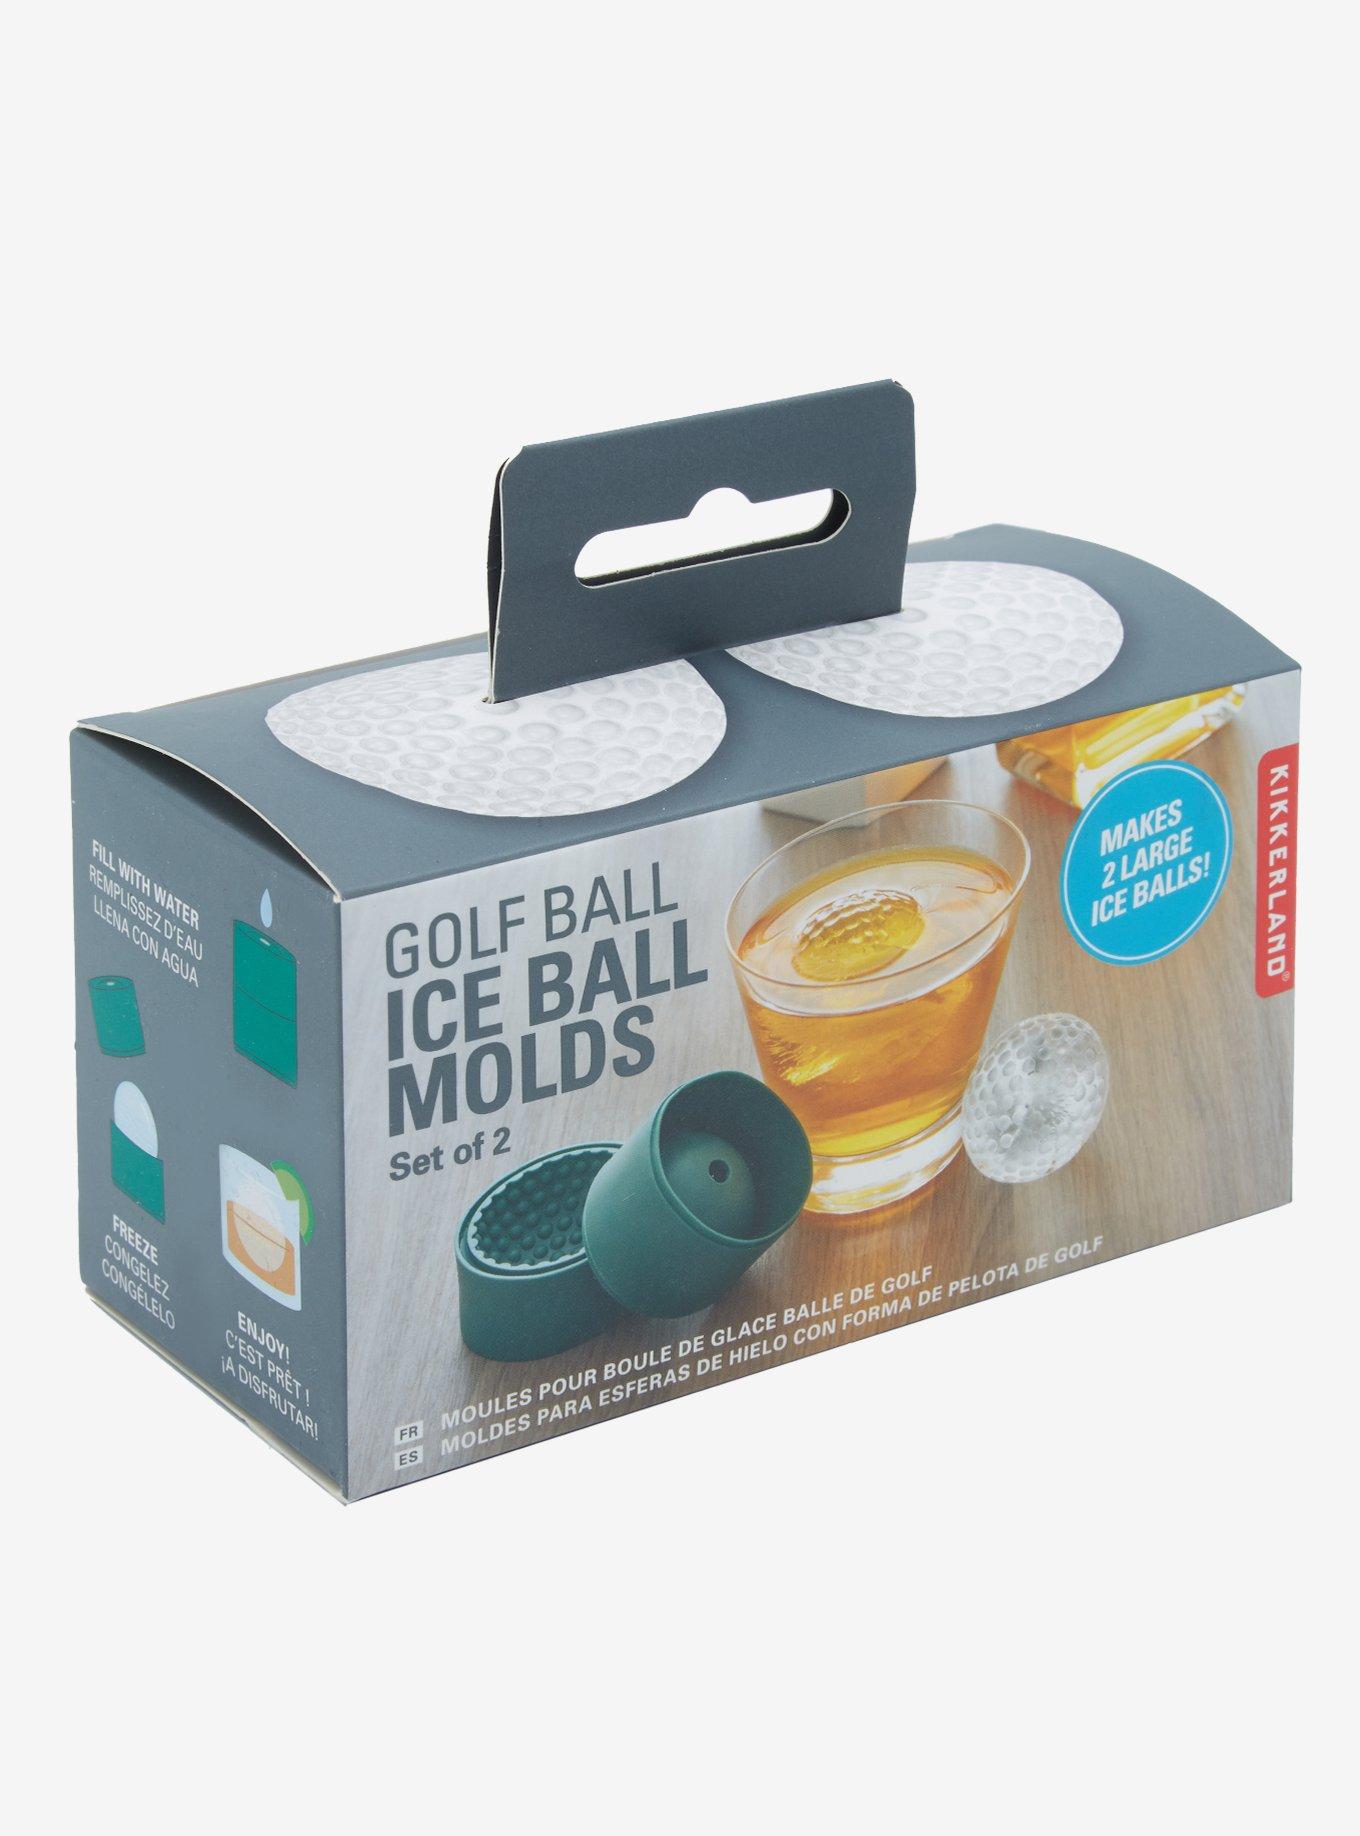 Golf Ball Ice Ball Mold Set